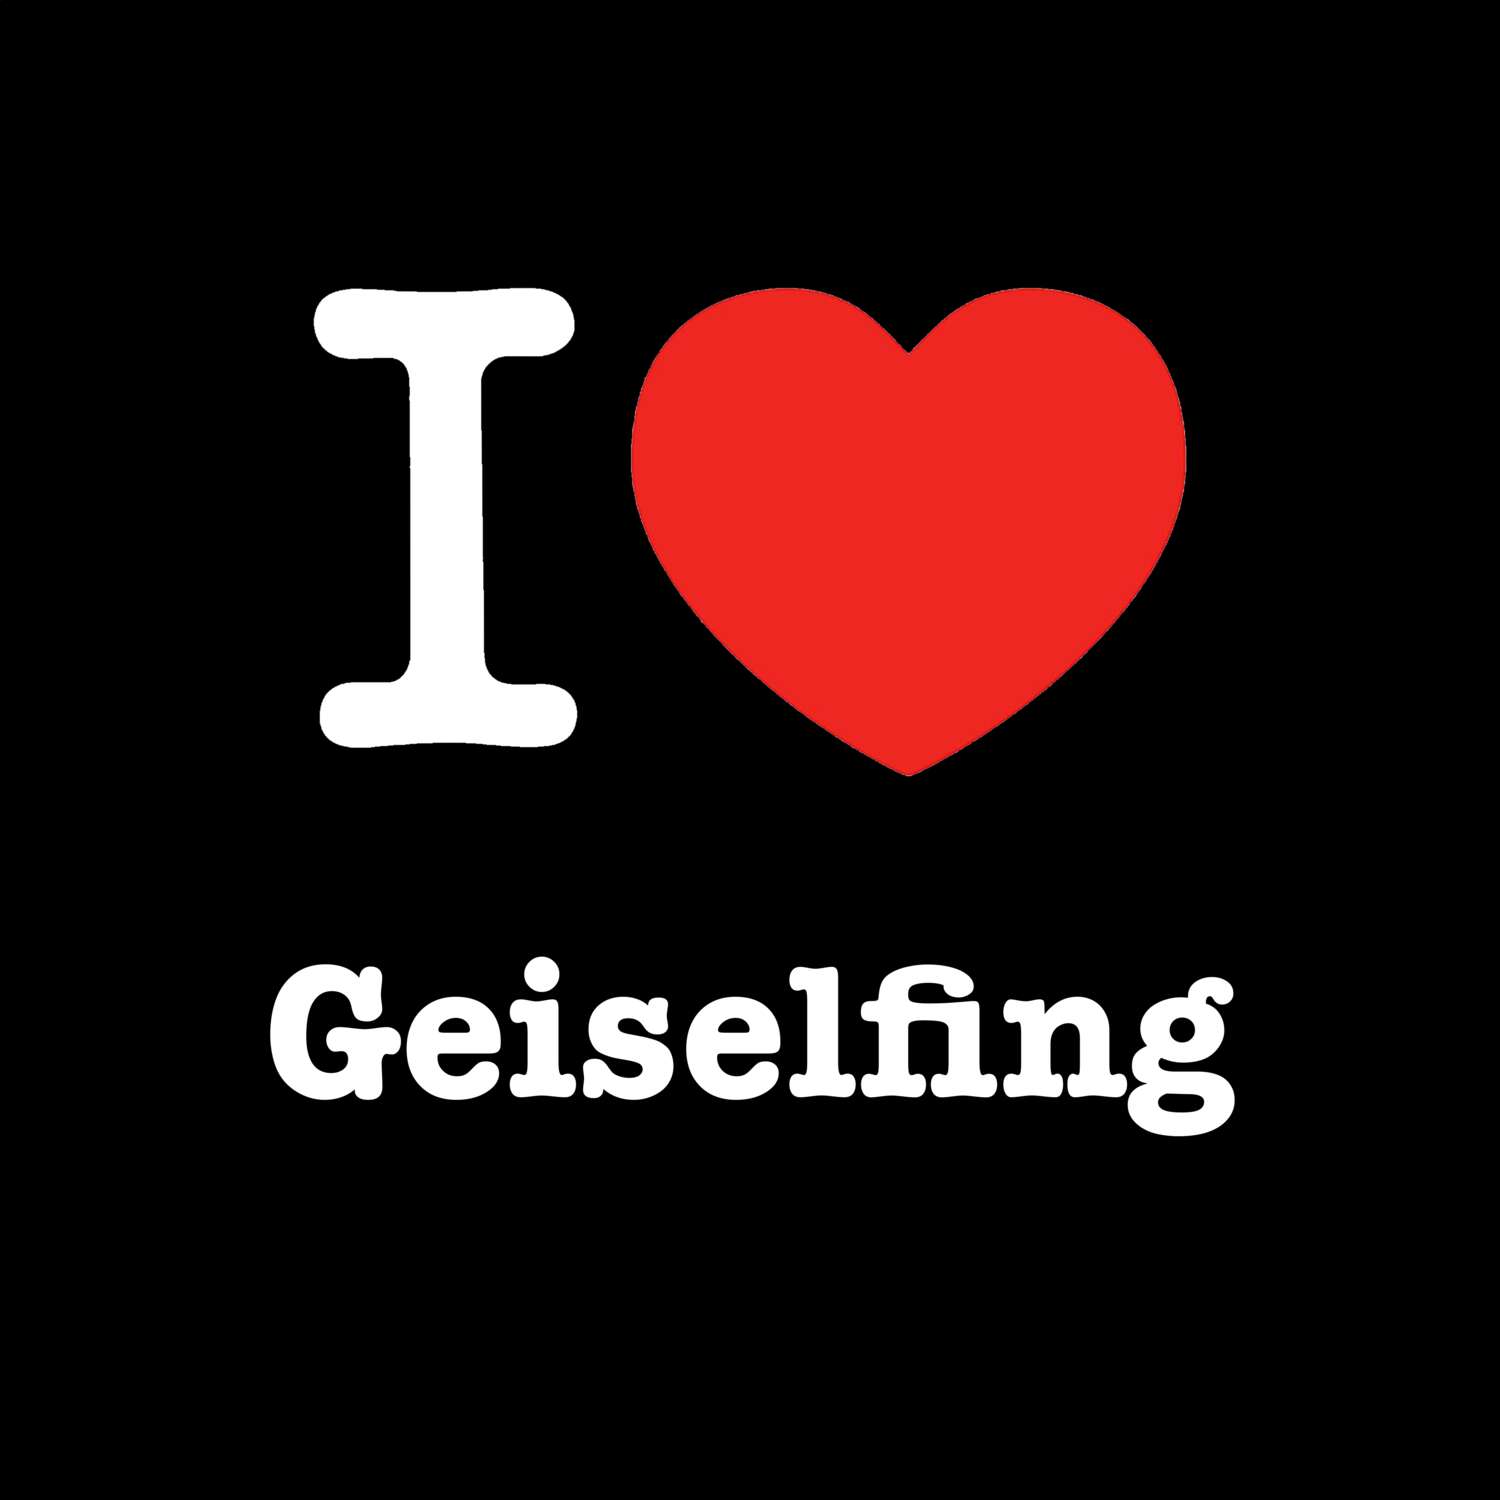 Geiselfing T-Shirt »I love«